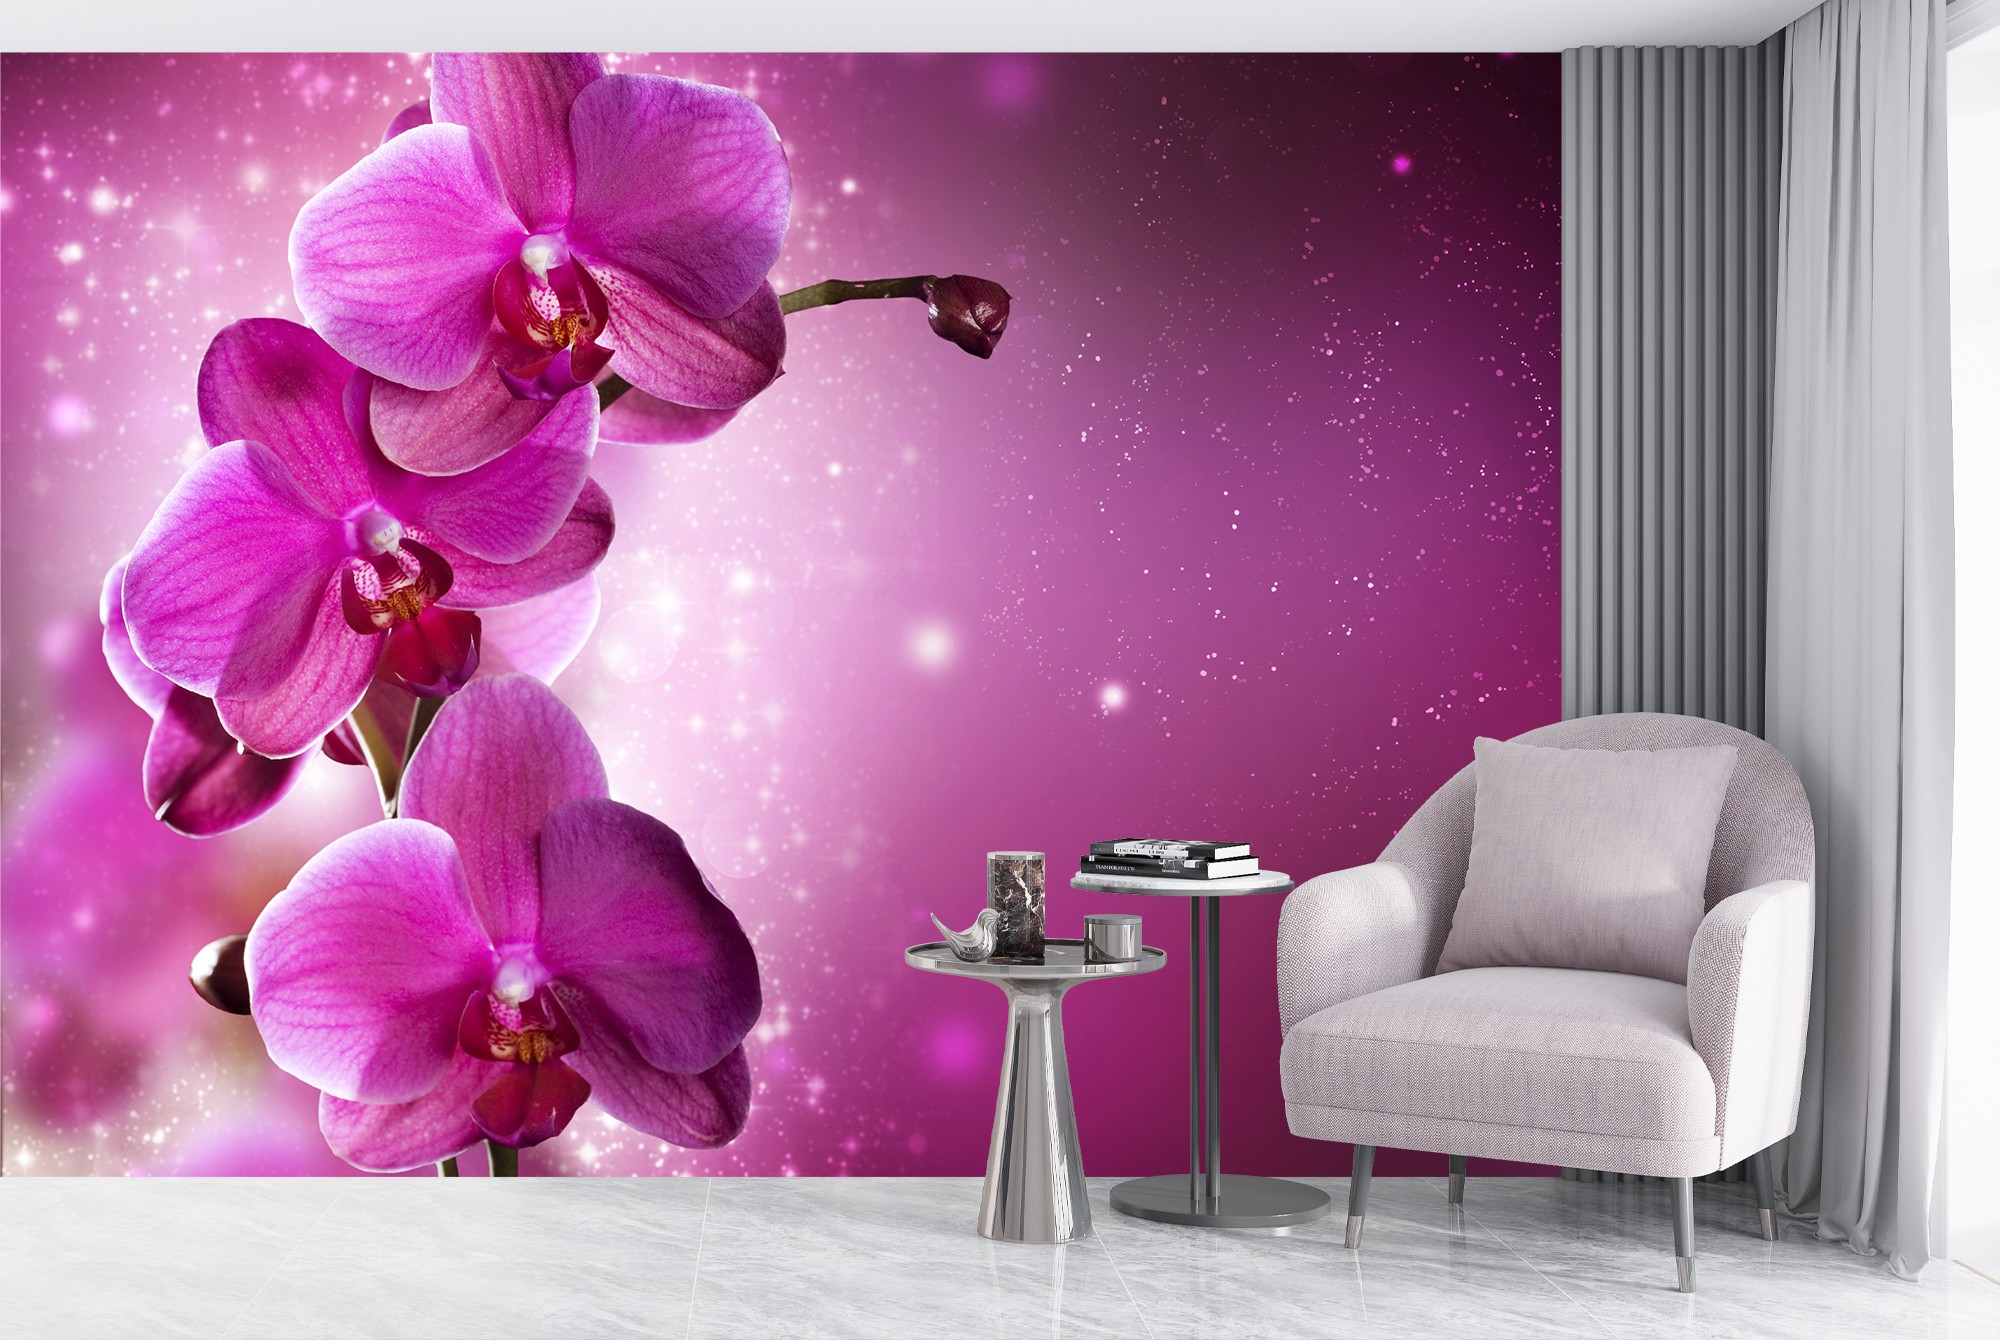 Purple Orchid Wallpaper Wall Mural